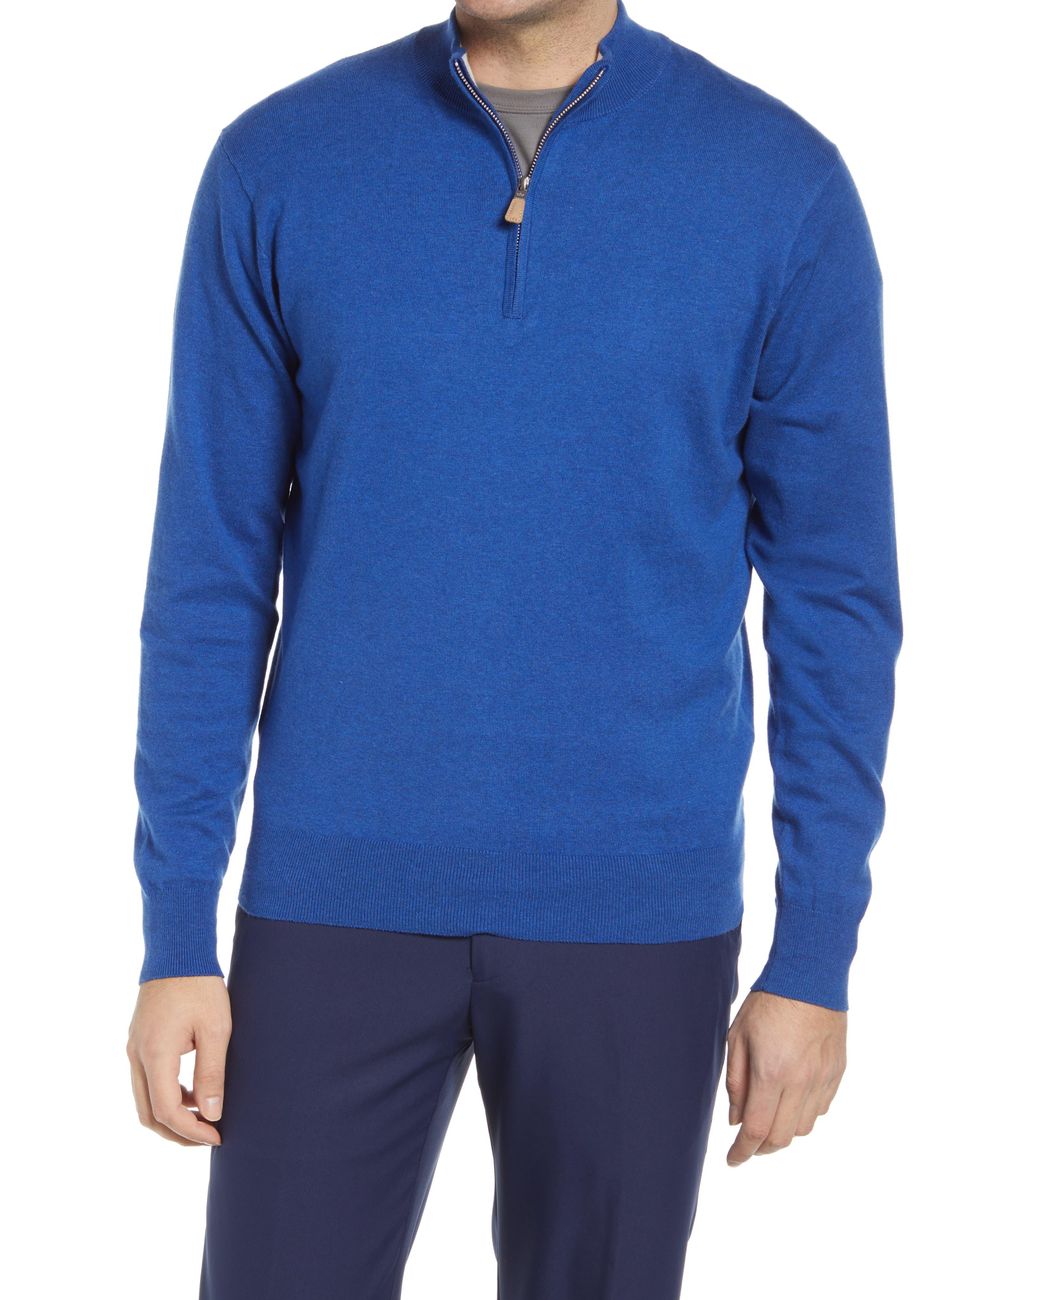 Peter Millar Cotton Crown Quarter Zip Pullover in Blue for Men - Lyst